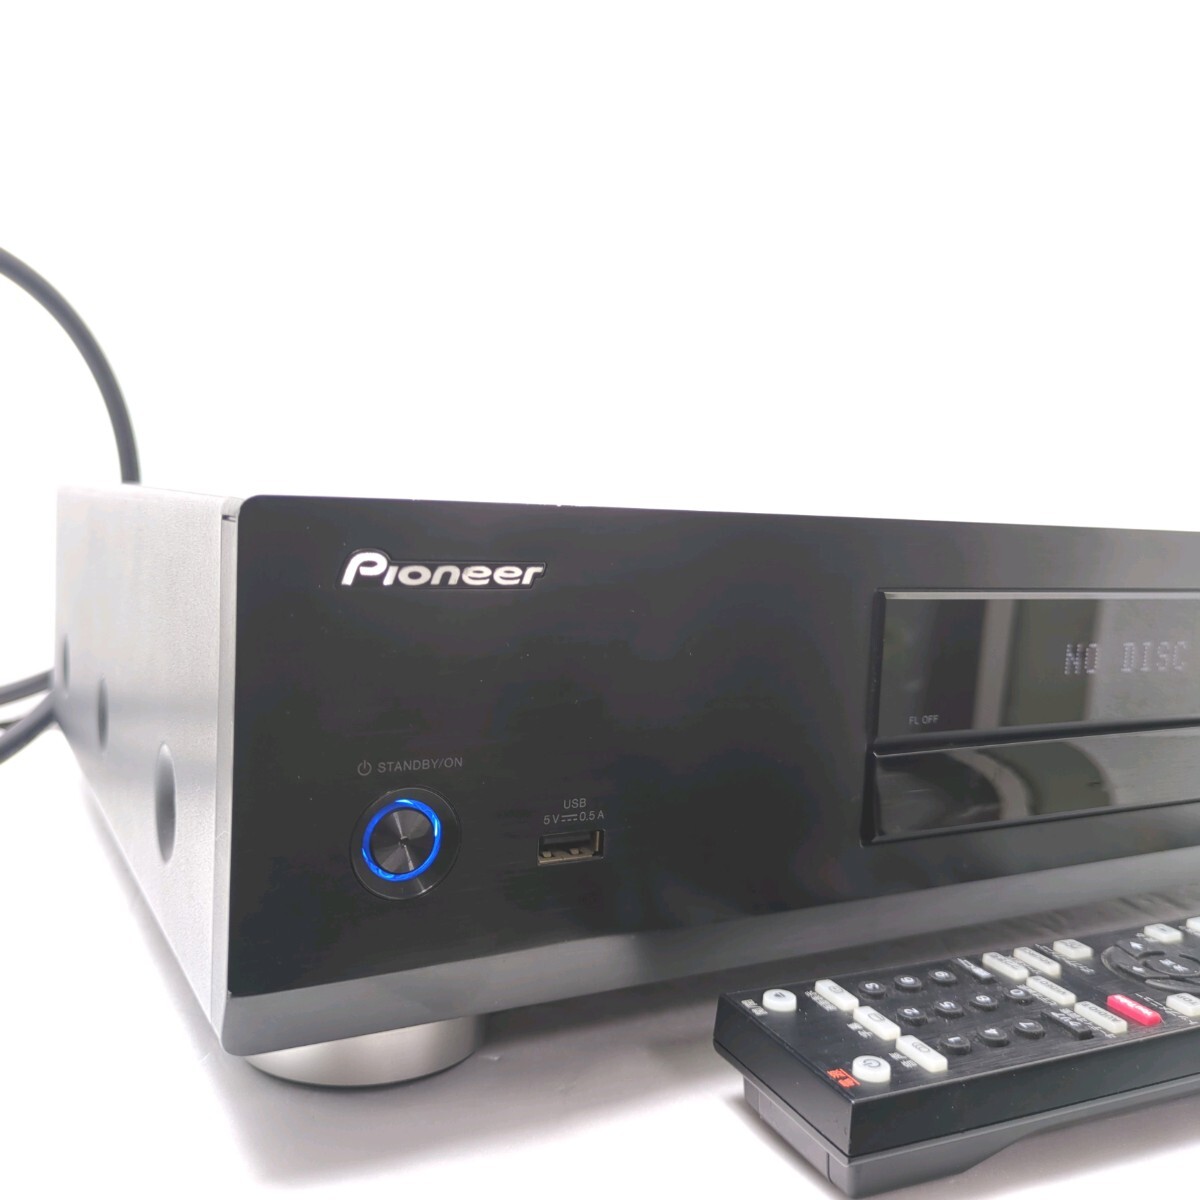  Pioneer パイオニア ブルーレイディスクプレーヤー BDP-LX58 2014年製 リモコン付の画像1